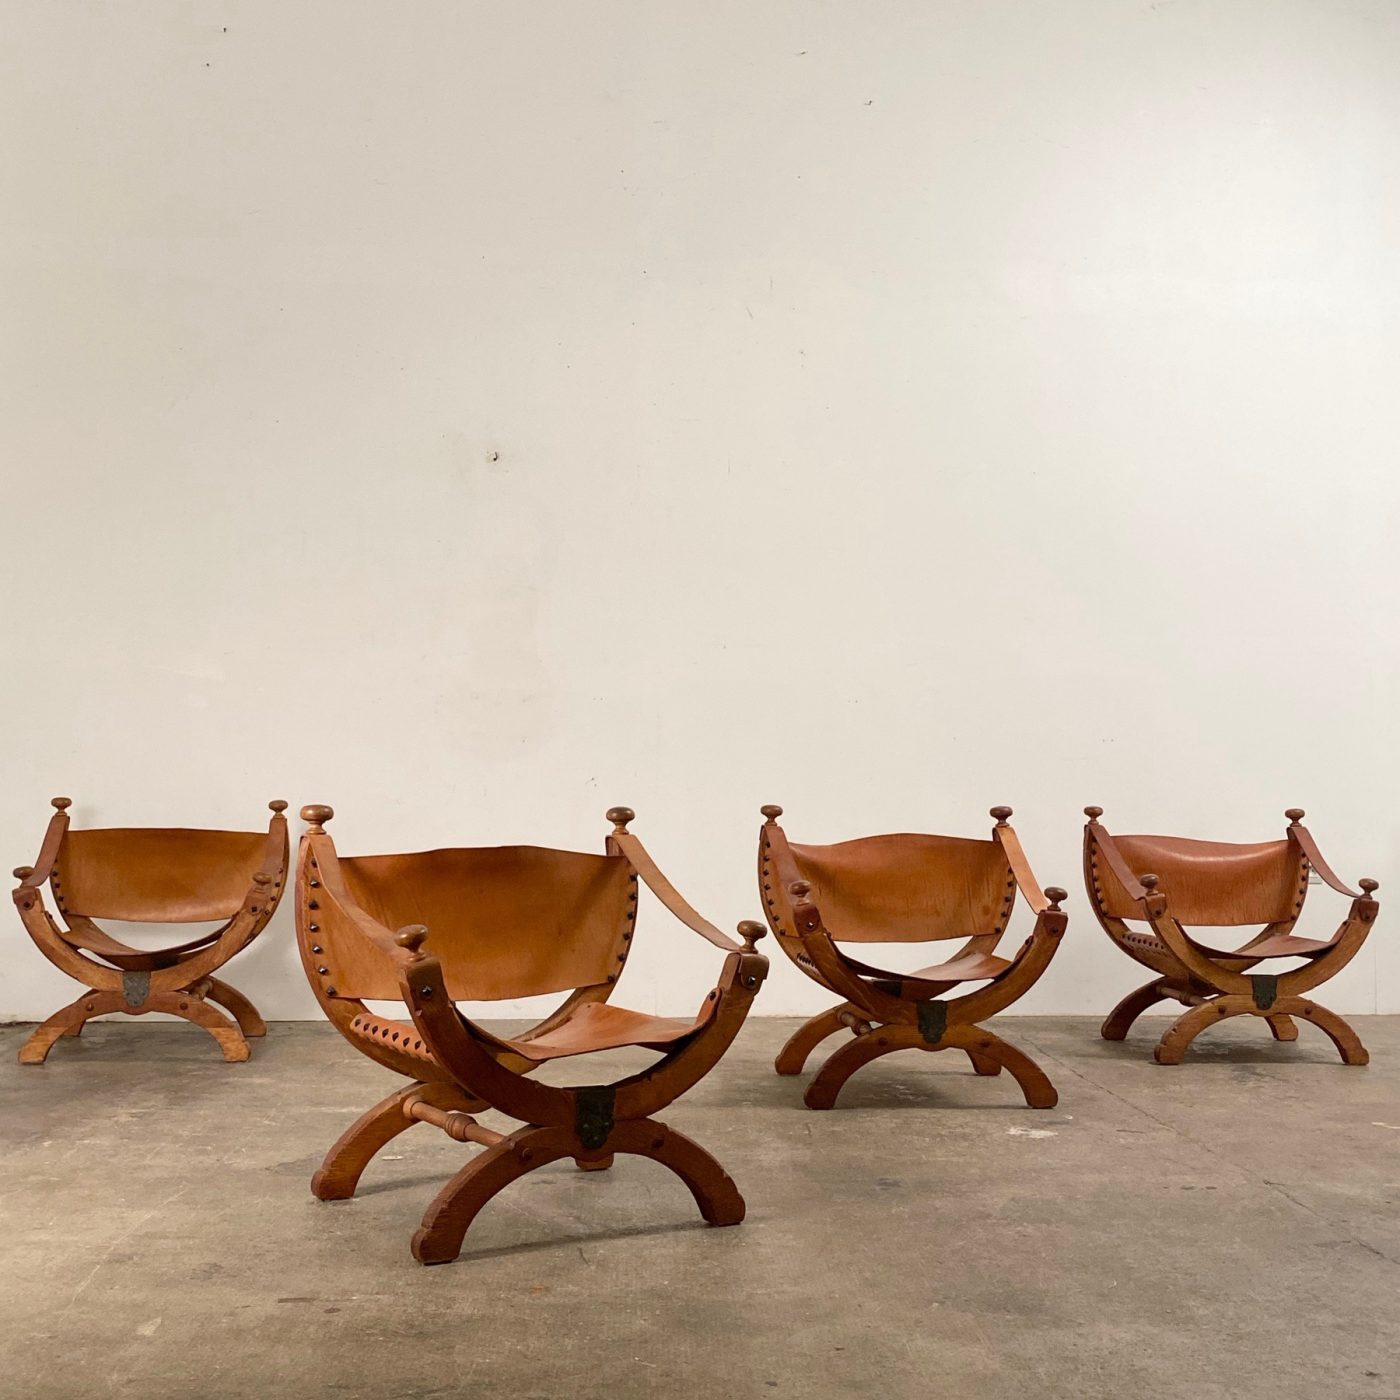 objet-vagabond-leather-chairs0000